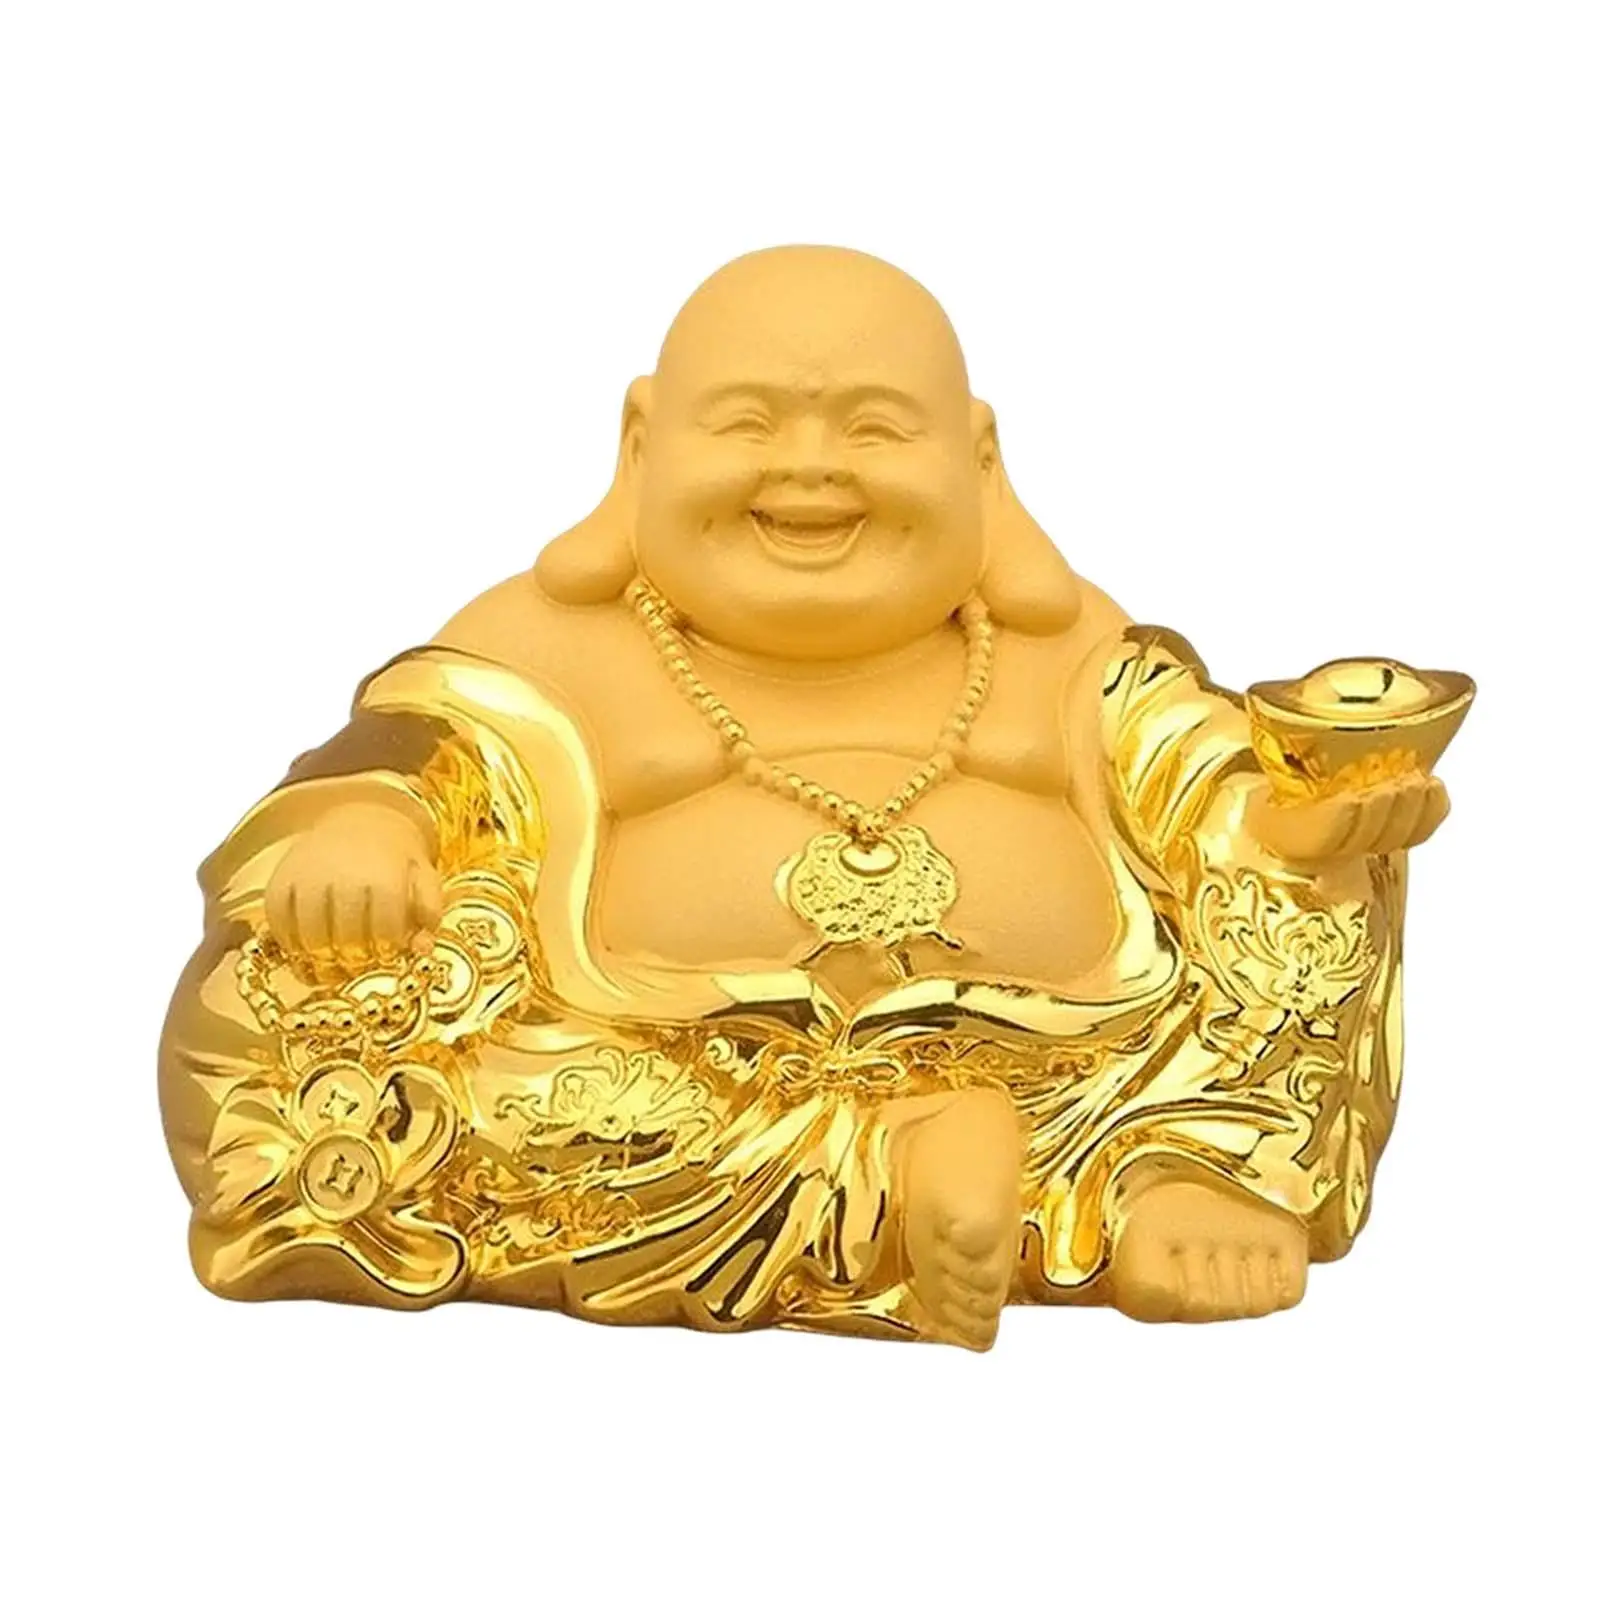 Maitreya Buddha Statues Sculpture Luck Decoration Traditional Figurine for Desktop Office Car Dashboard Home Housewarming Gifts